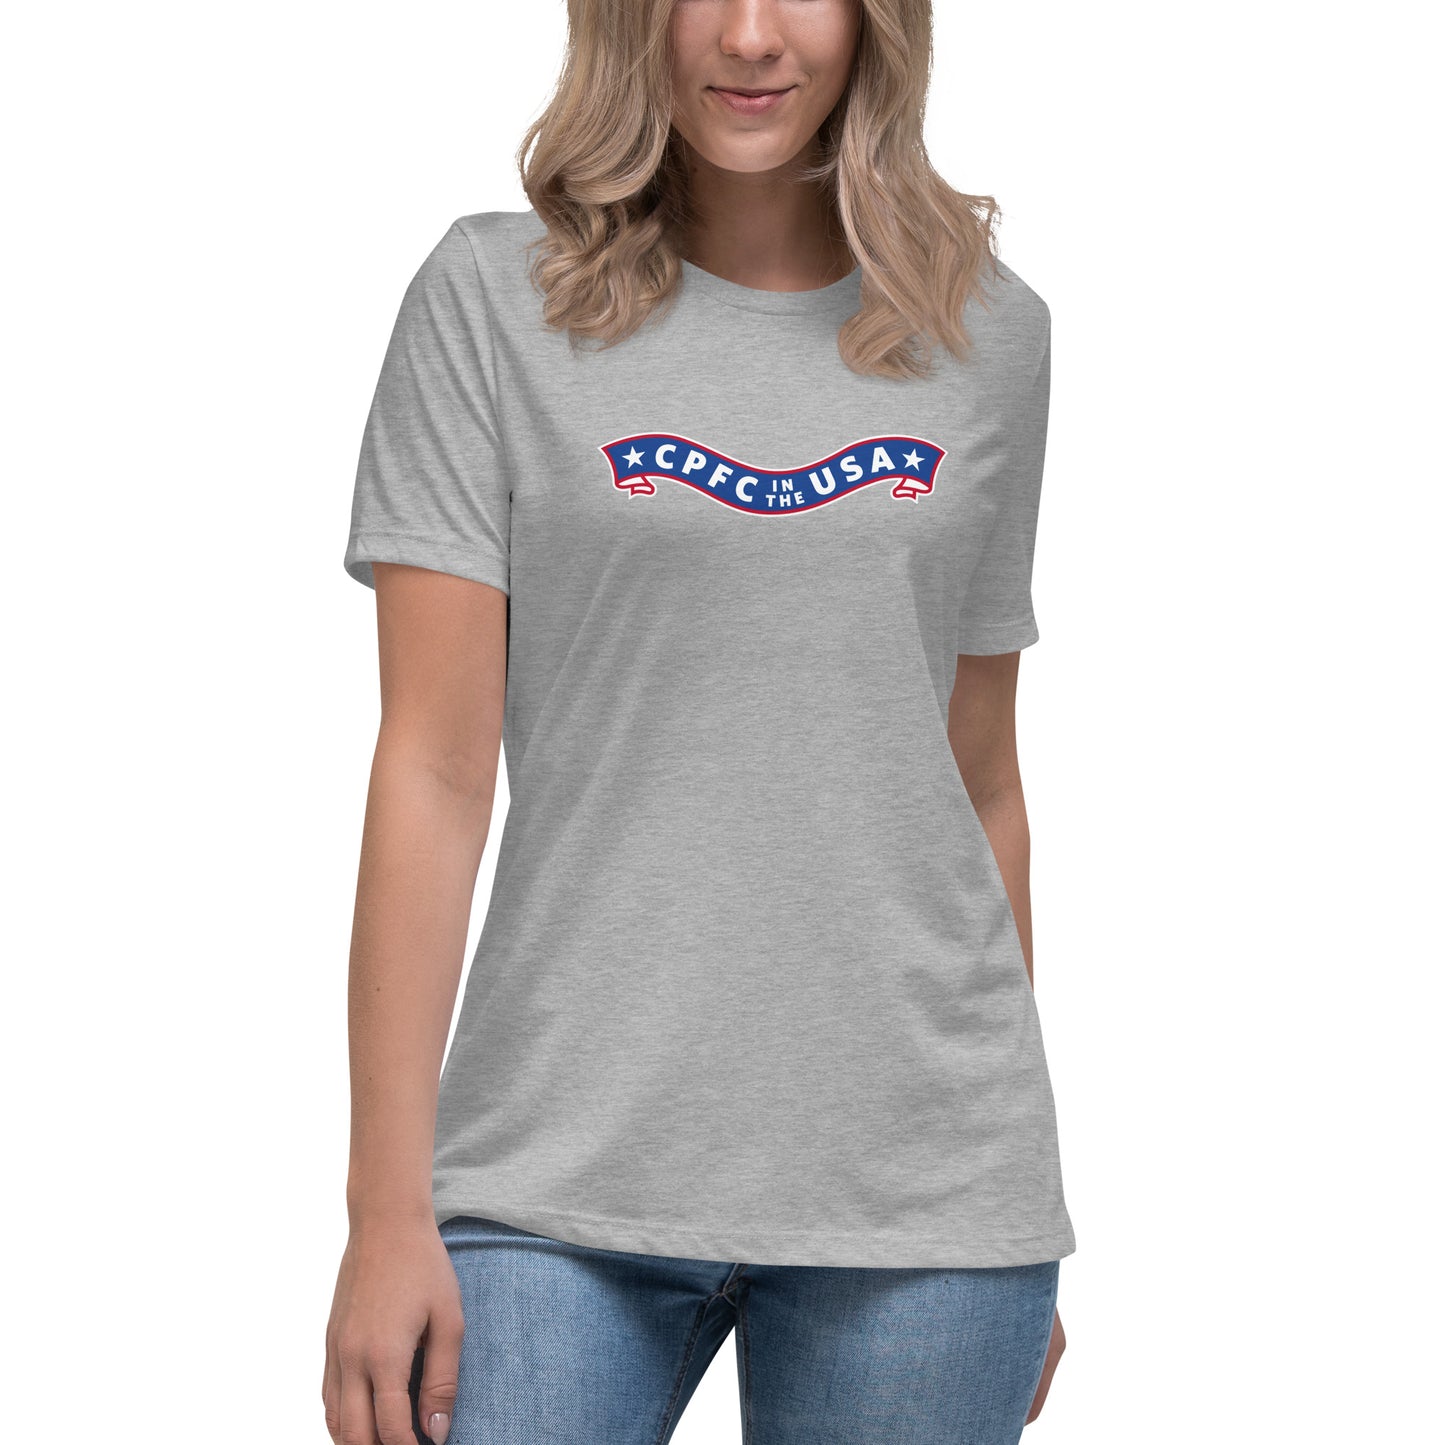 CPFC USA Ribbon Women's Relaxed T-Shirt